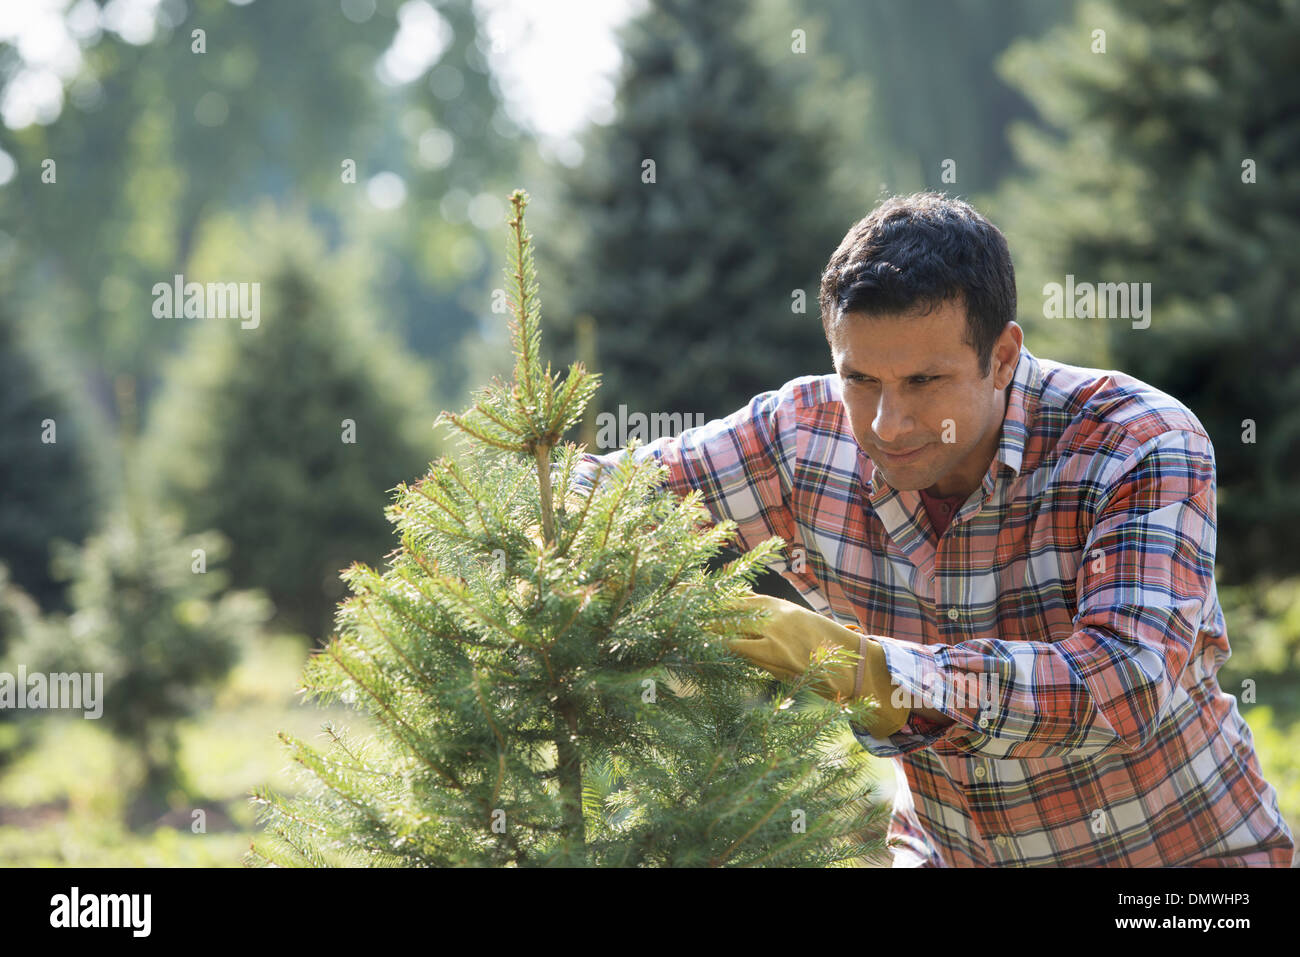 A man pruning an organically grown christmas tree. Stock Photo